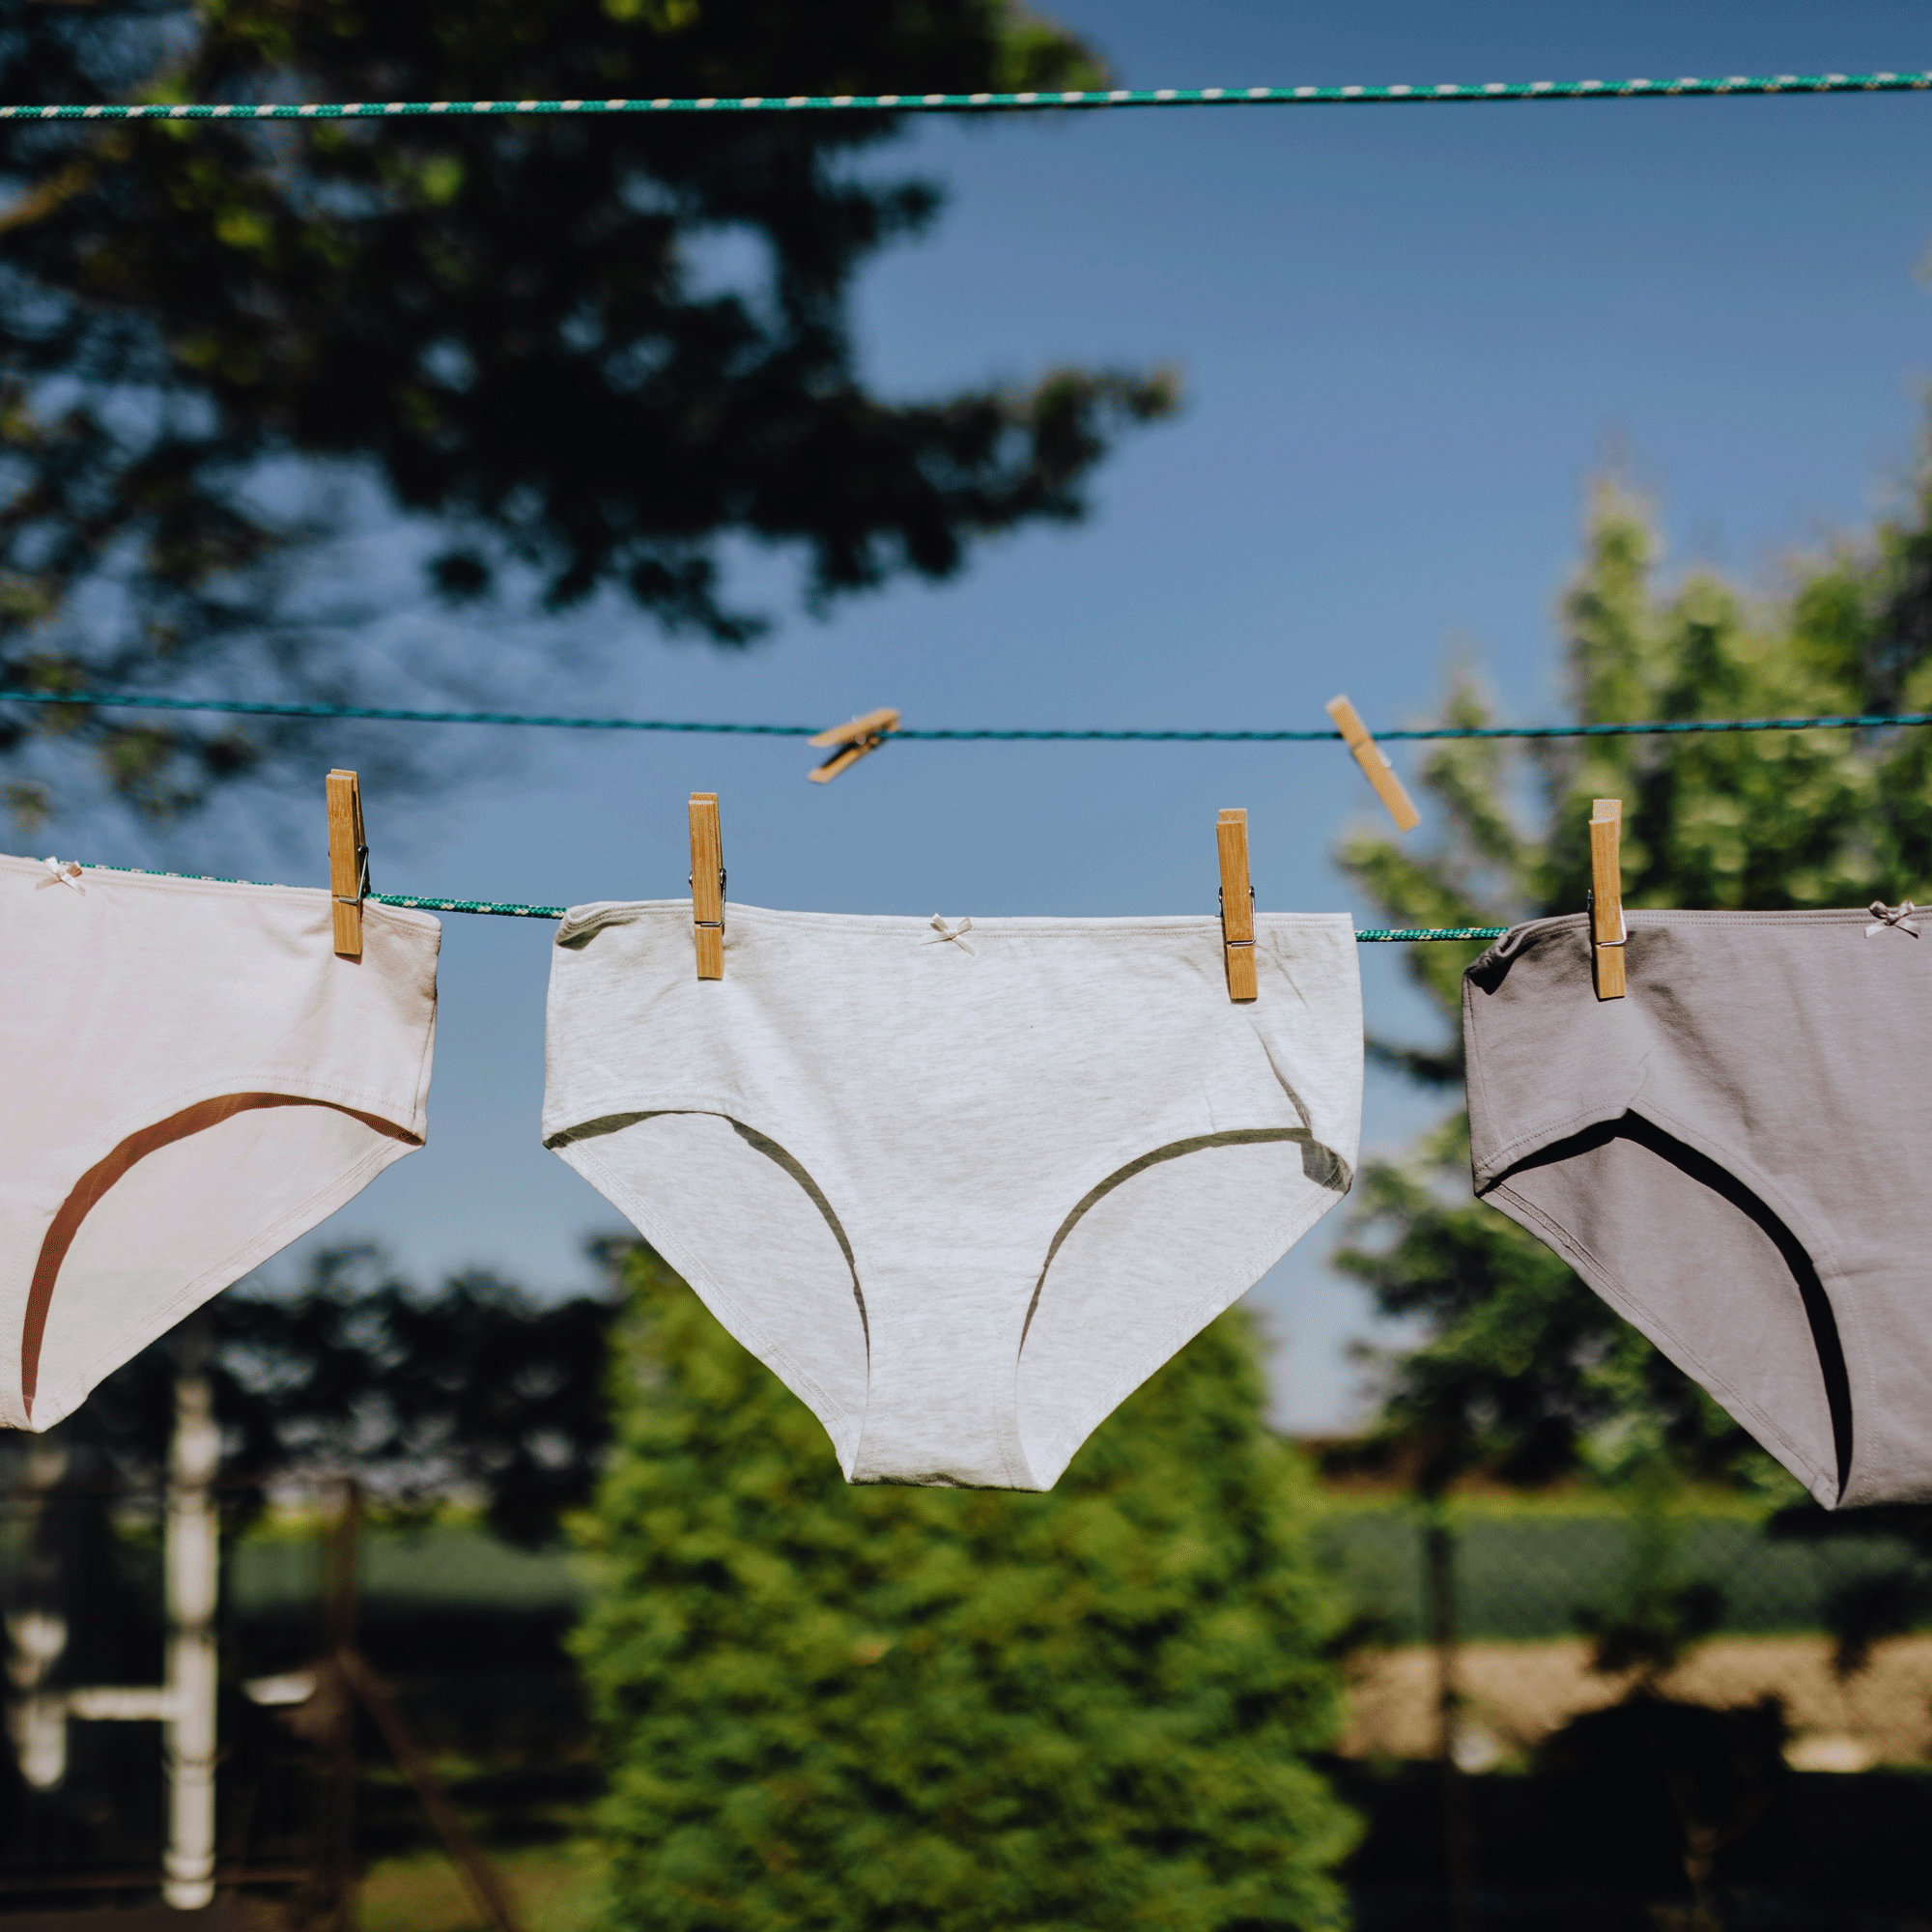 How to Throw an Underwear Party – WAMA Underwear